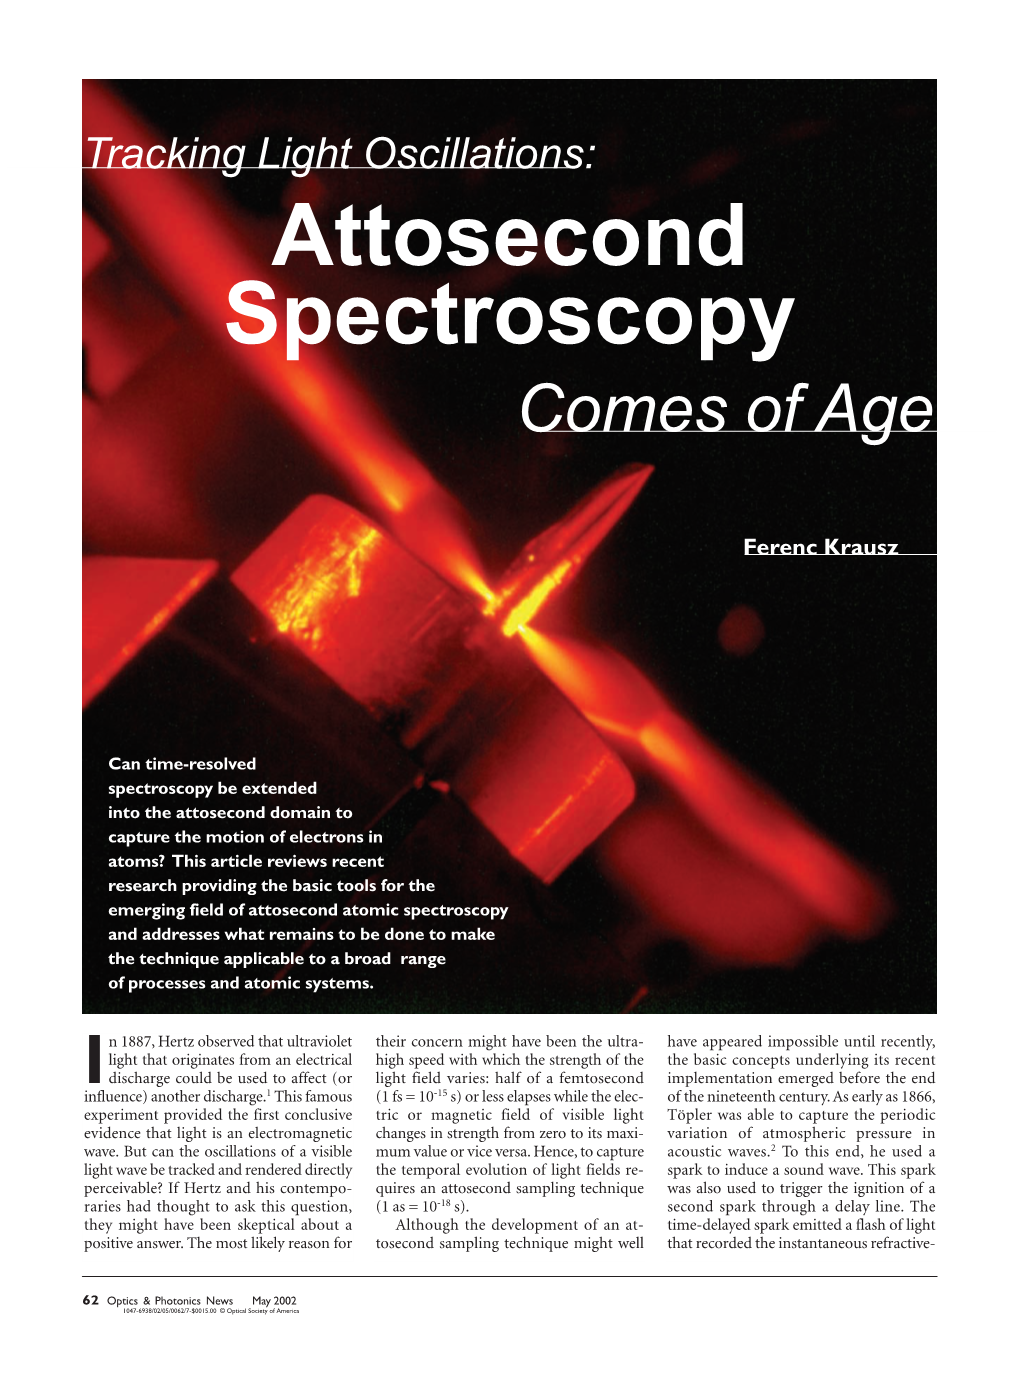 Attosecond Spectroscopy Comes of Age